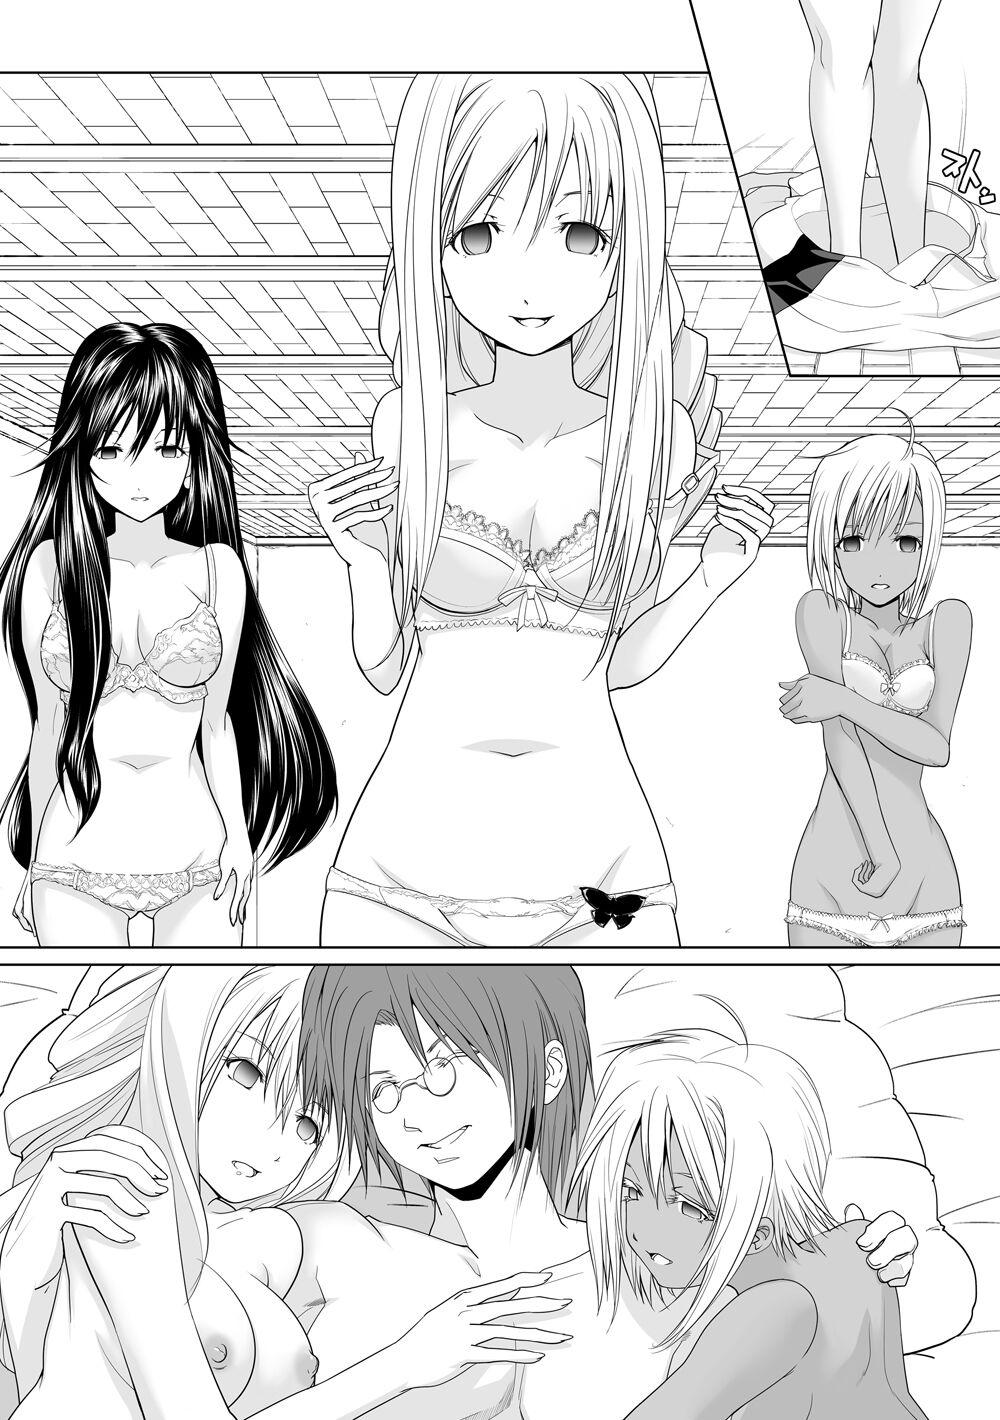 Weird AR*A Mind-control Manga - Aria Amigos - Page 11